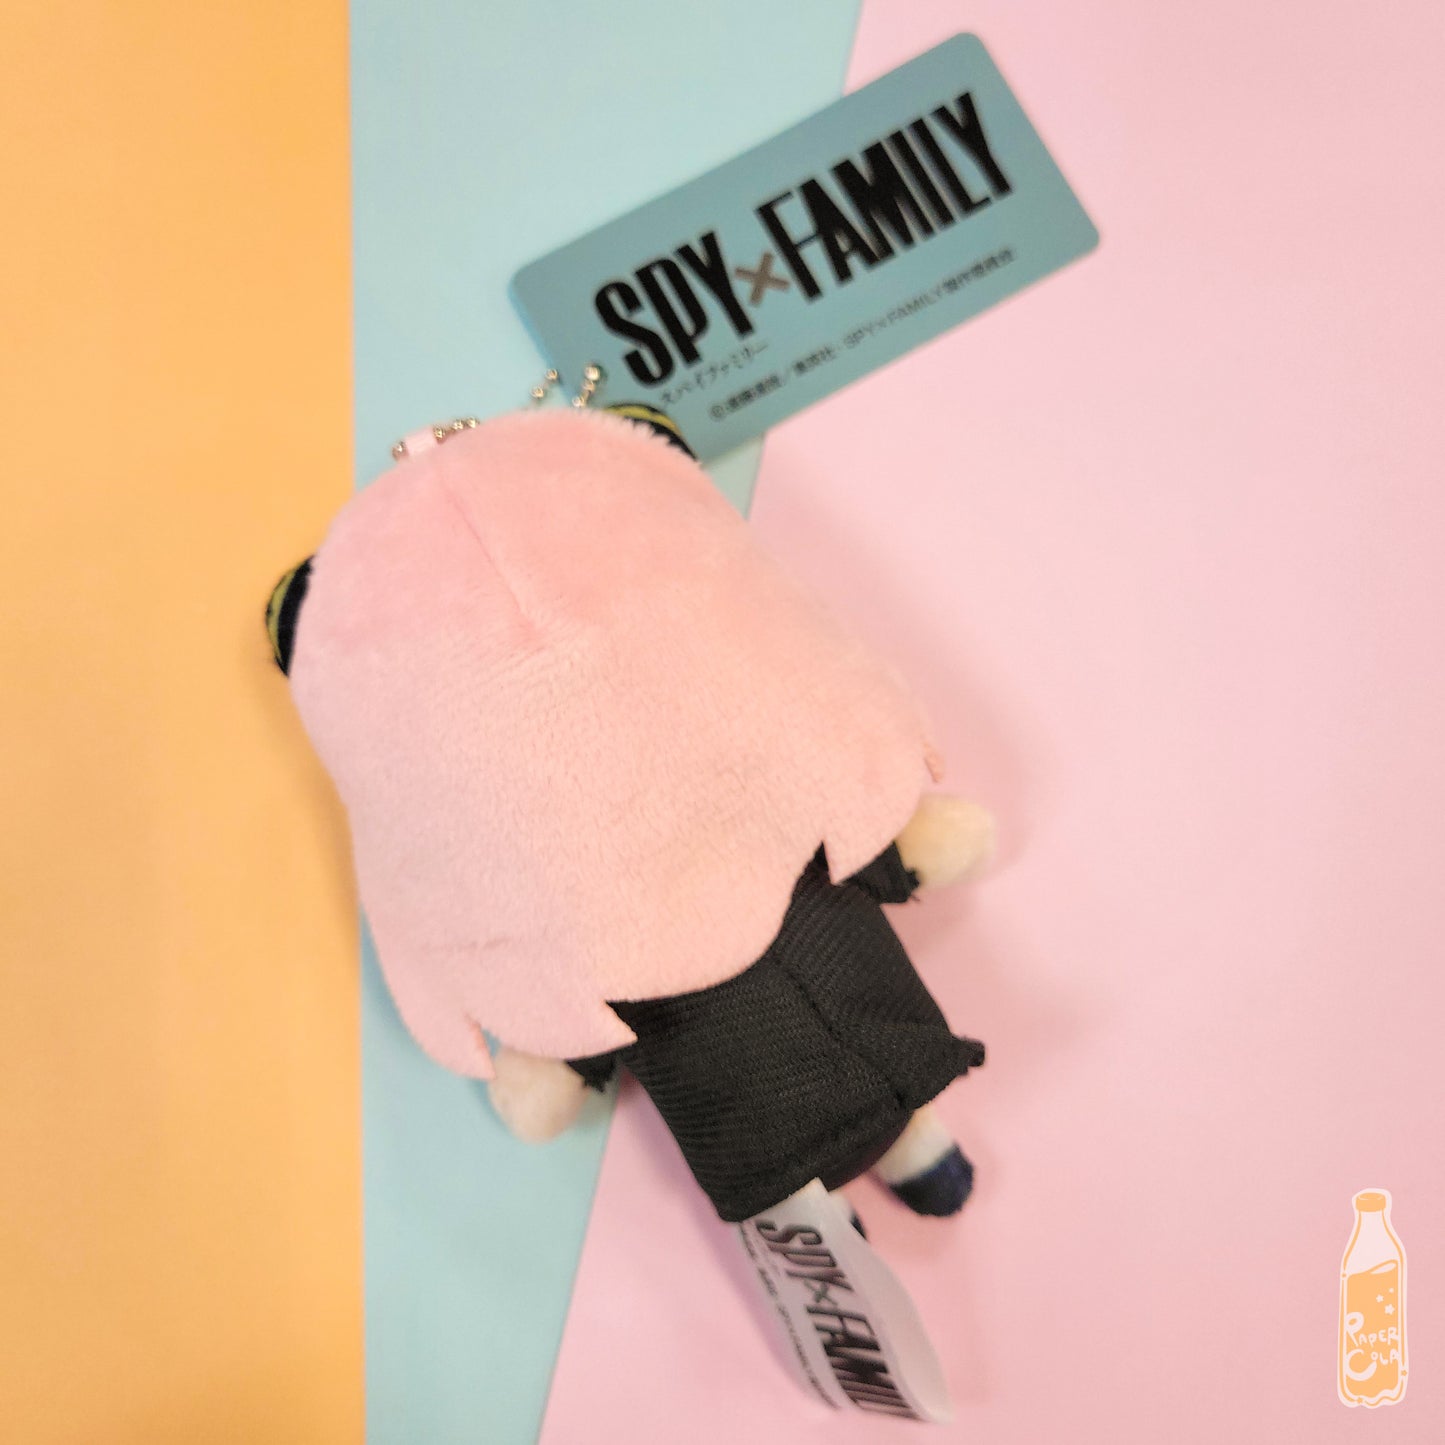 SPY X FAMILY Anya Forger Mascot Plush Keychain